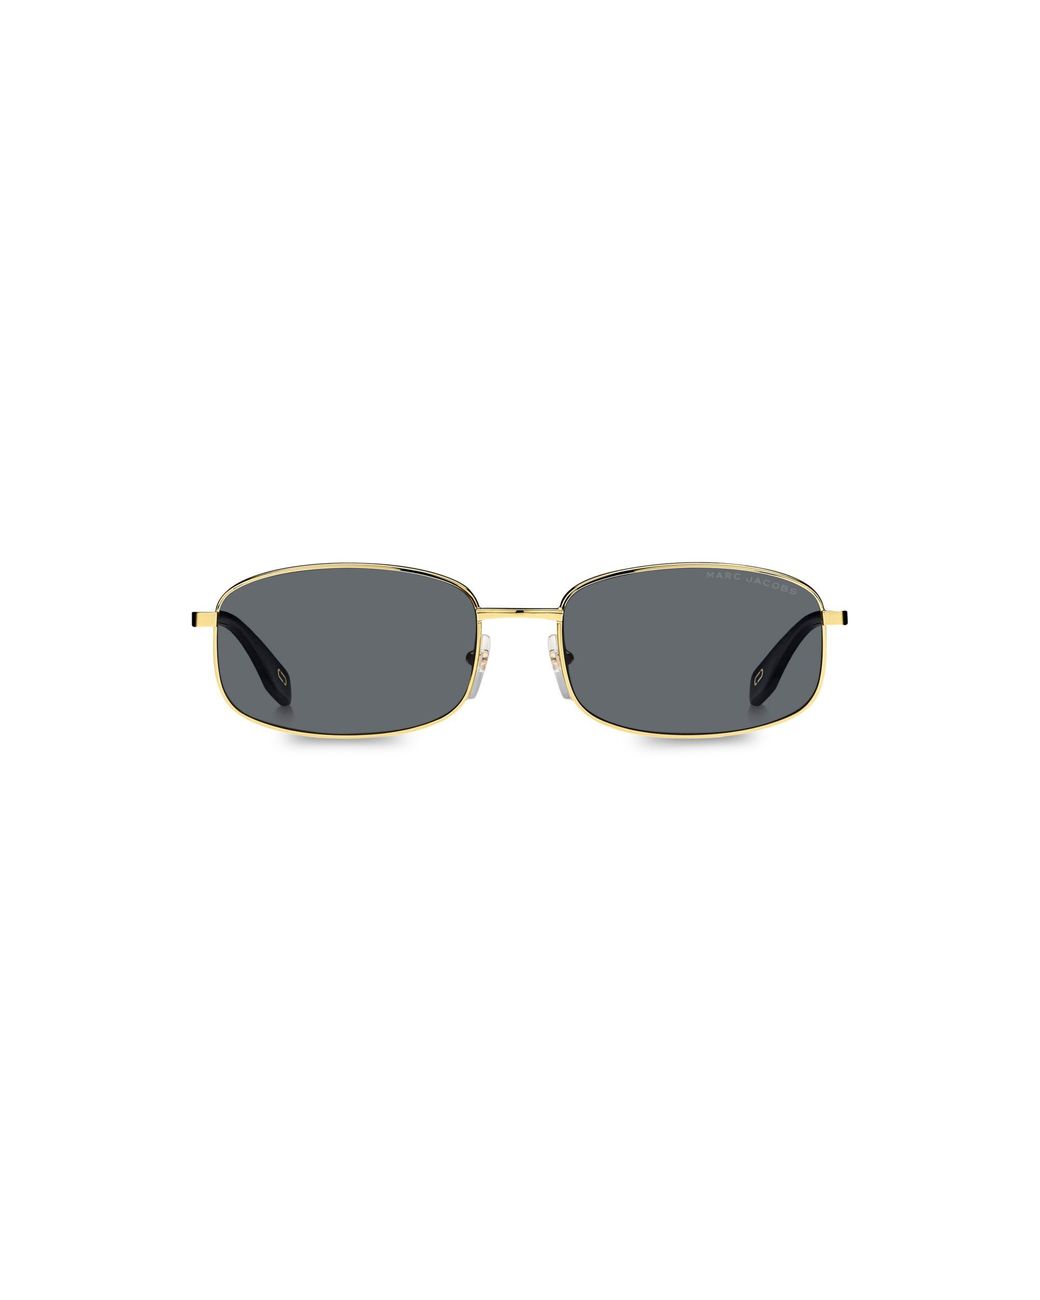 Marc Jacobs 56mm Rectangular Sunglasses in Gold Black (Black) - Lyst